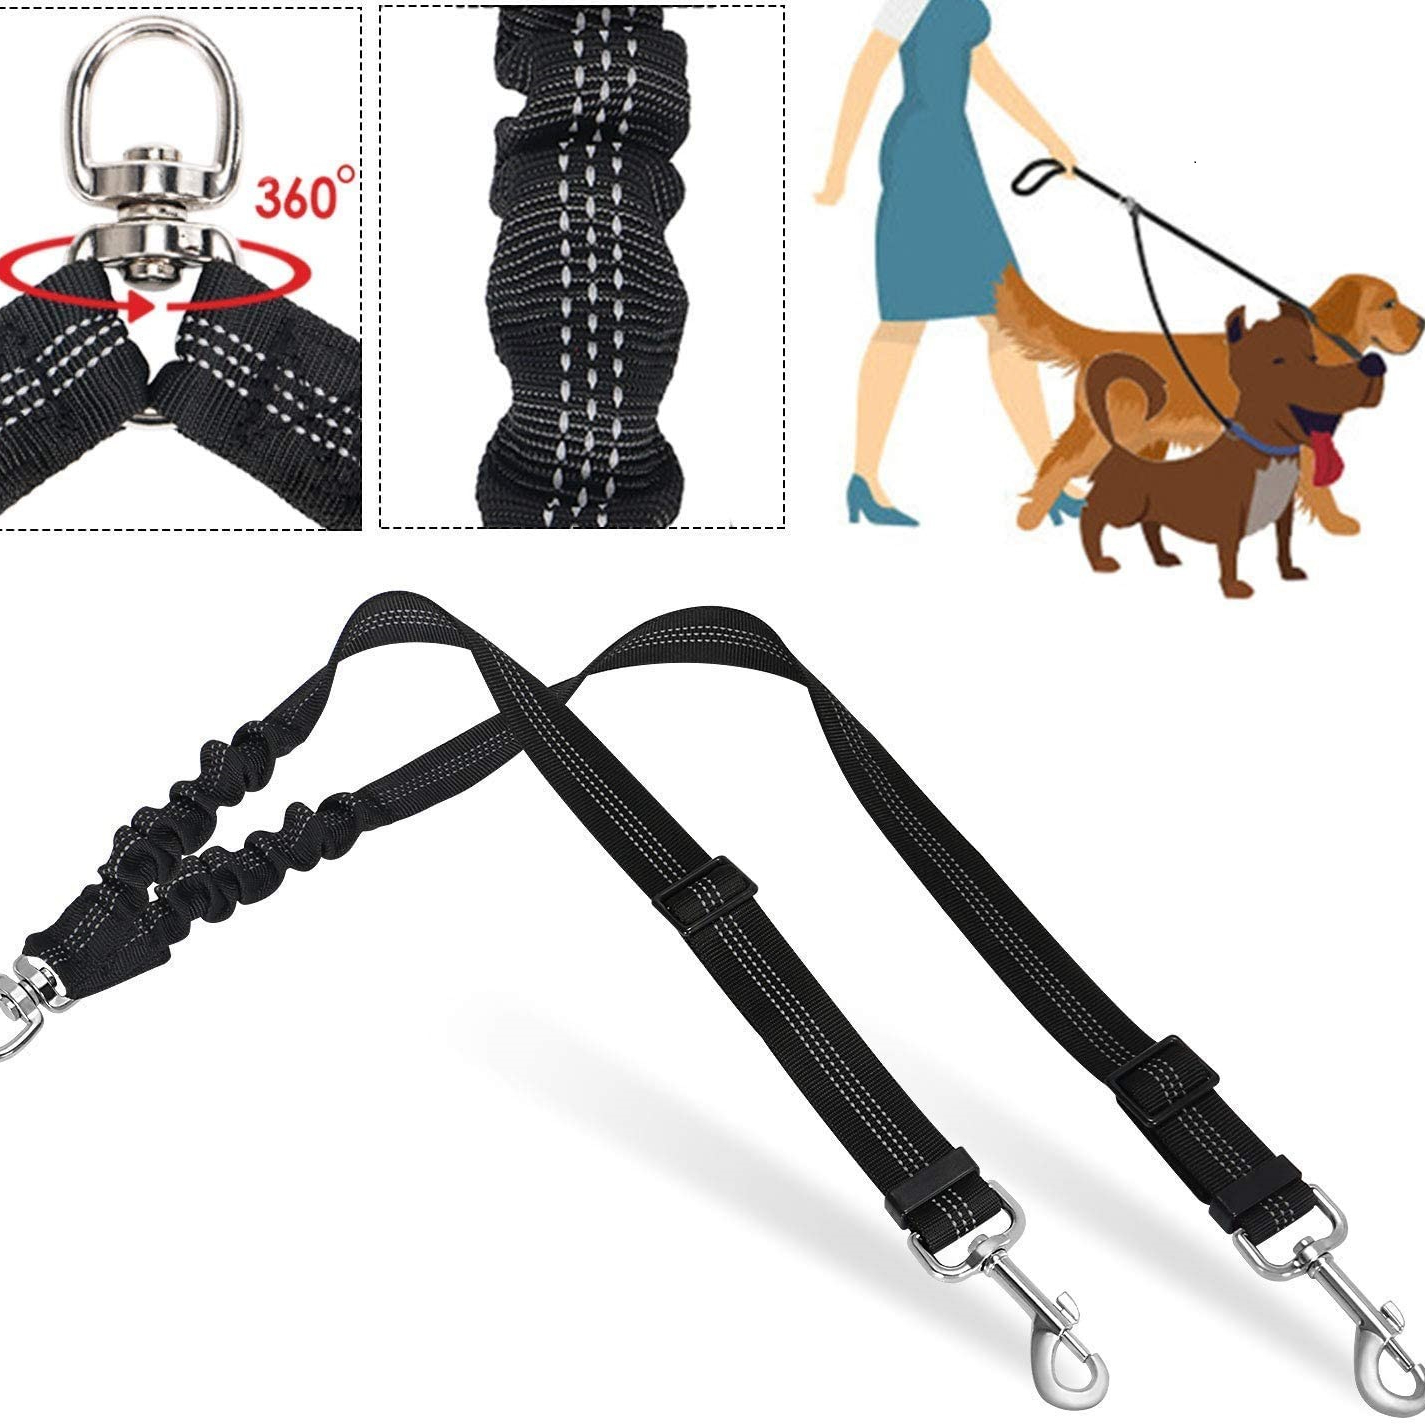 

Double Dog Leash, No Tangle 360° Swivel Rotation Adjustable Length Dual 2 Dog Lead Splitter, Comfortable Shock Absorbing Walking Training For 2 Dogs